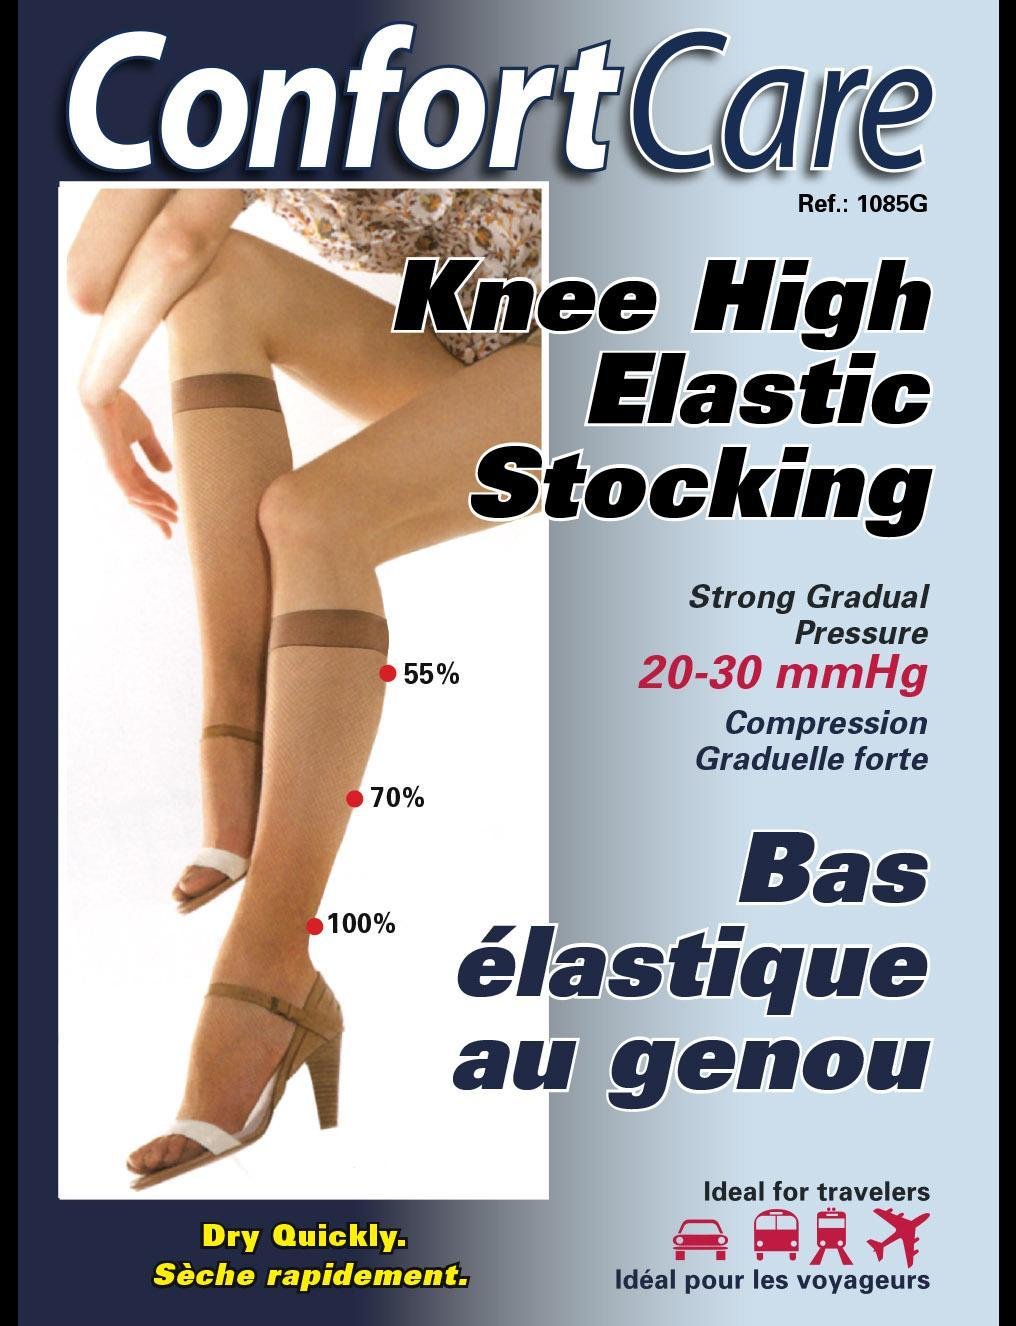 Knee High Elastic Stoking high compression (20-30 mmHg)